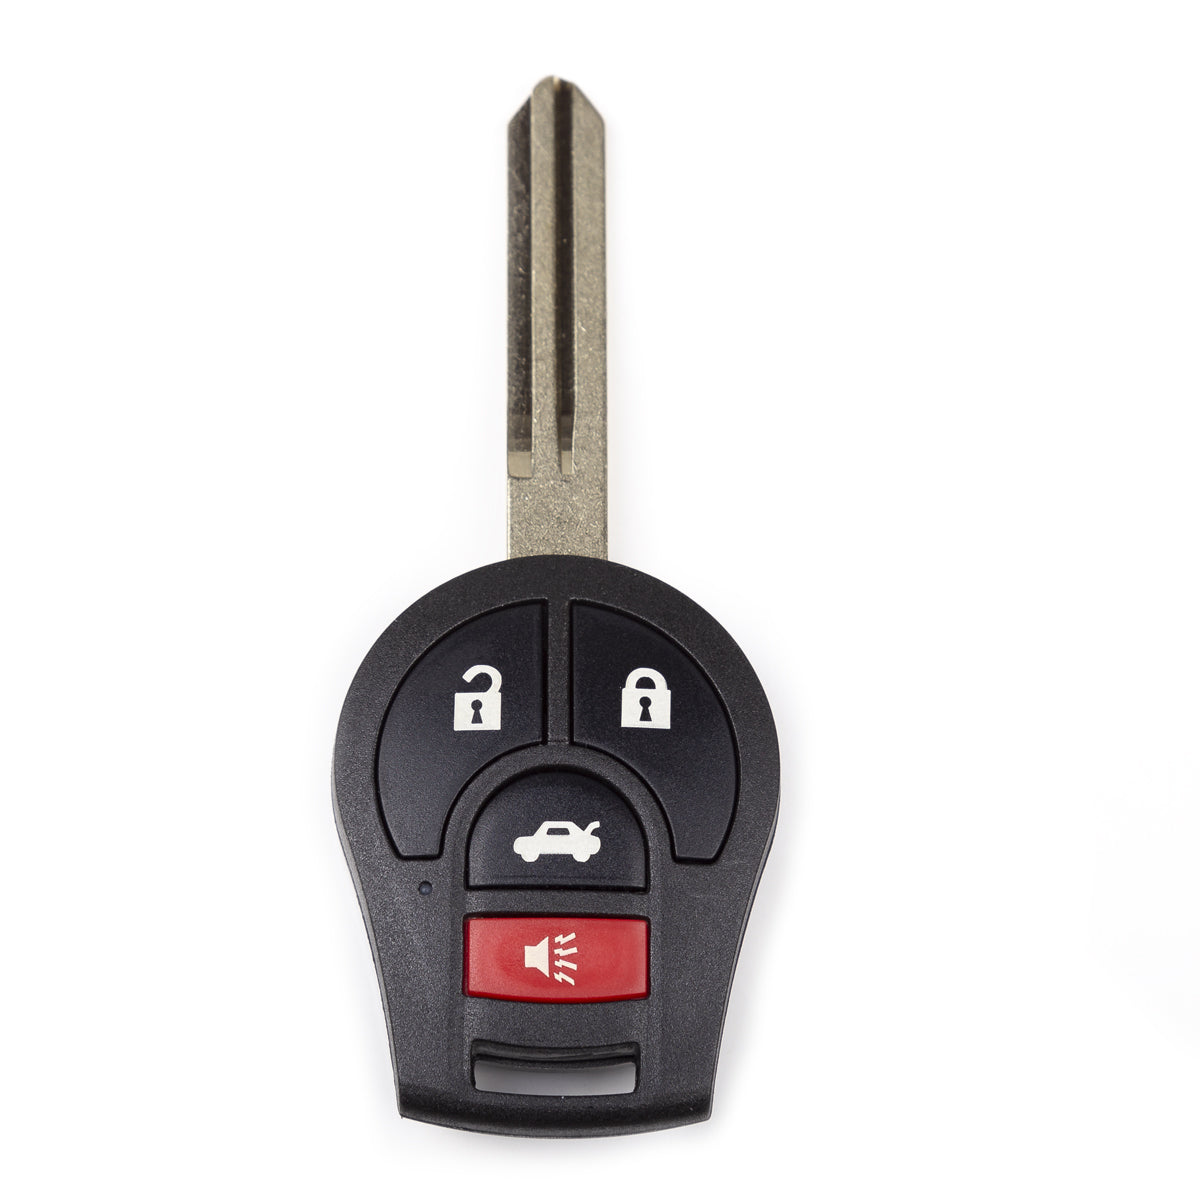 2007 Nissan Maxima Key Fob - Aftermarket - 4 Buttons Fob FCC# CWTWB1U751 - ID46 Chip